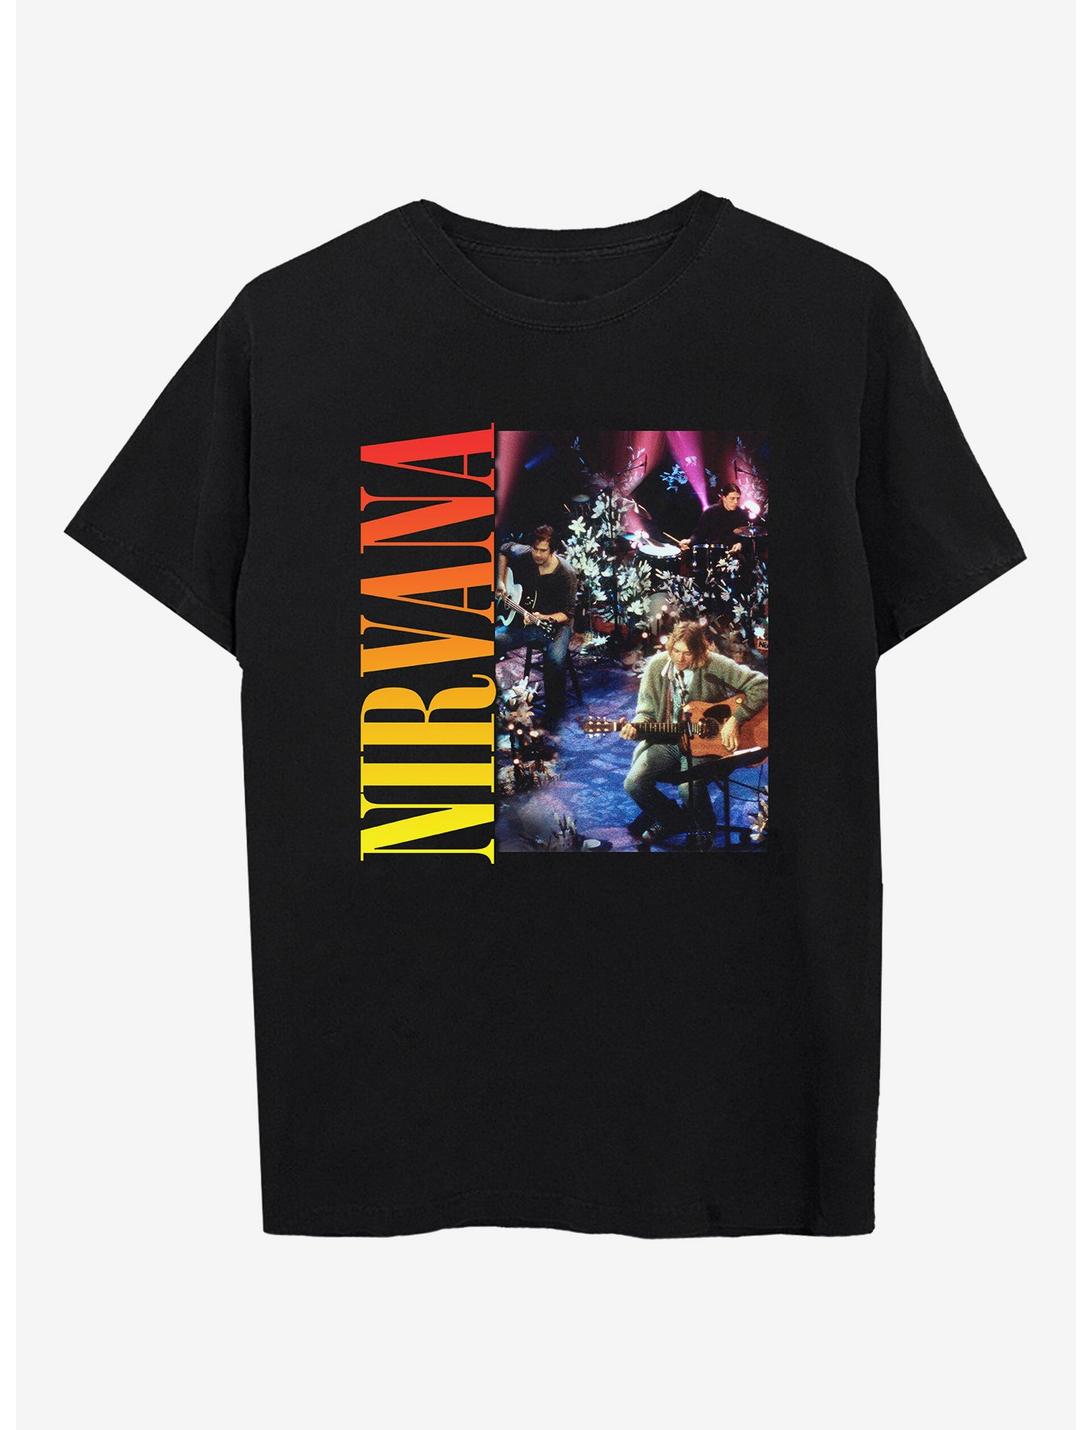 Nirvana Unplugged Boyfriend Fit Girls T-Shirt, BLACK, hi-res